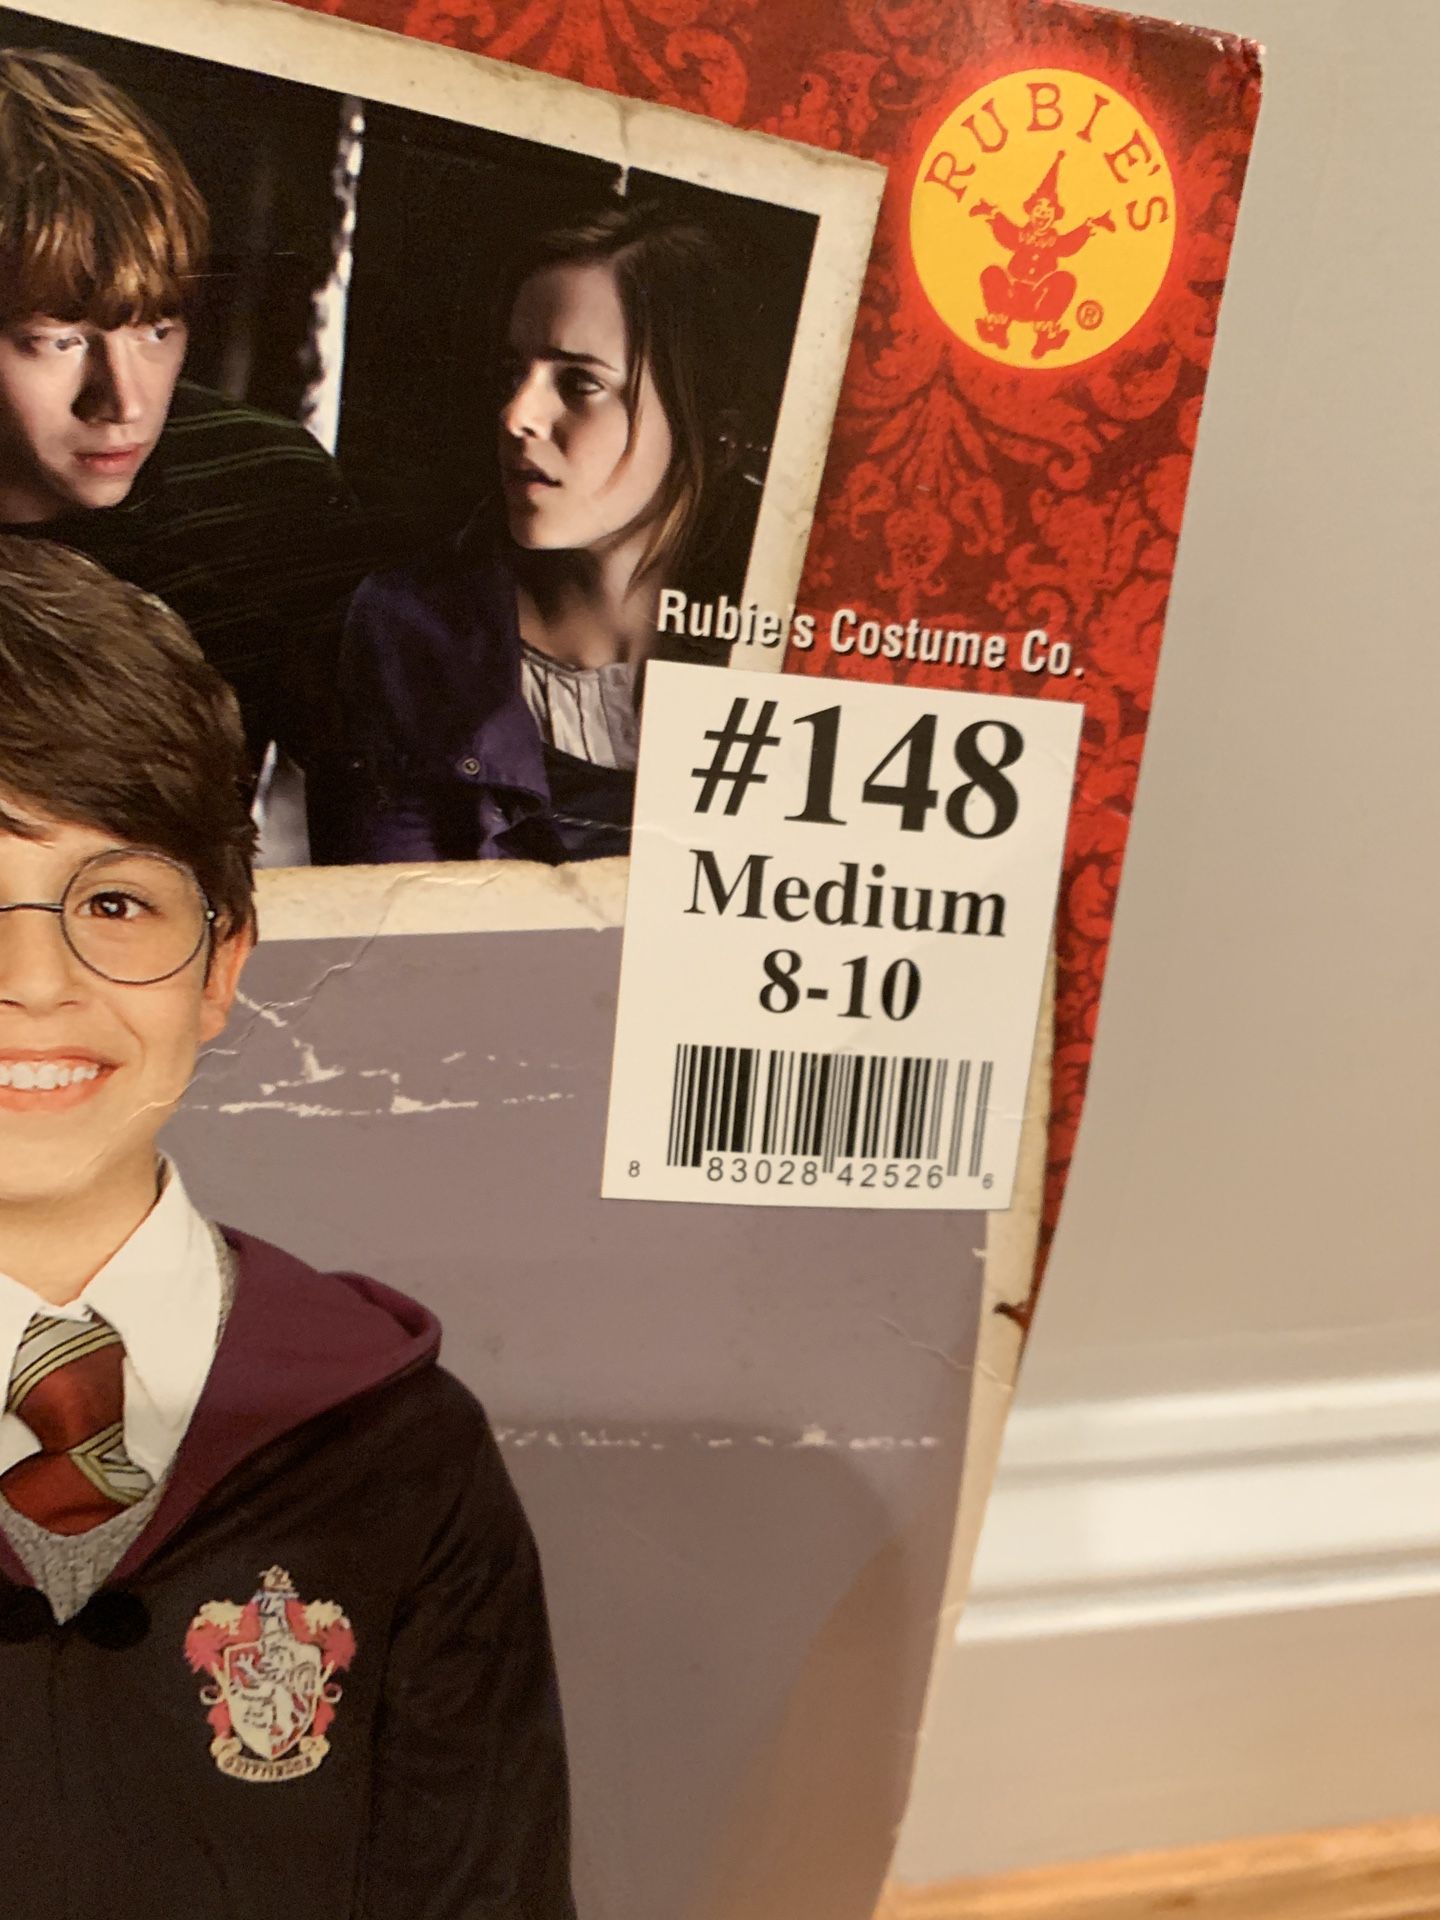 Harry Potter Costume - size 8-10